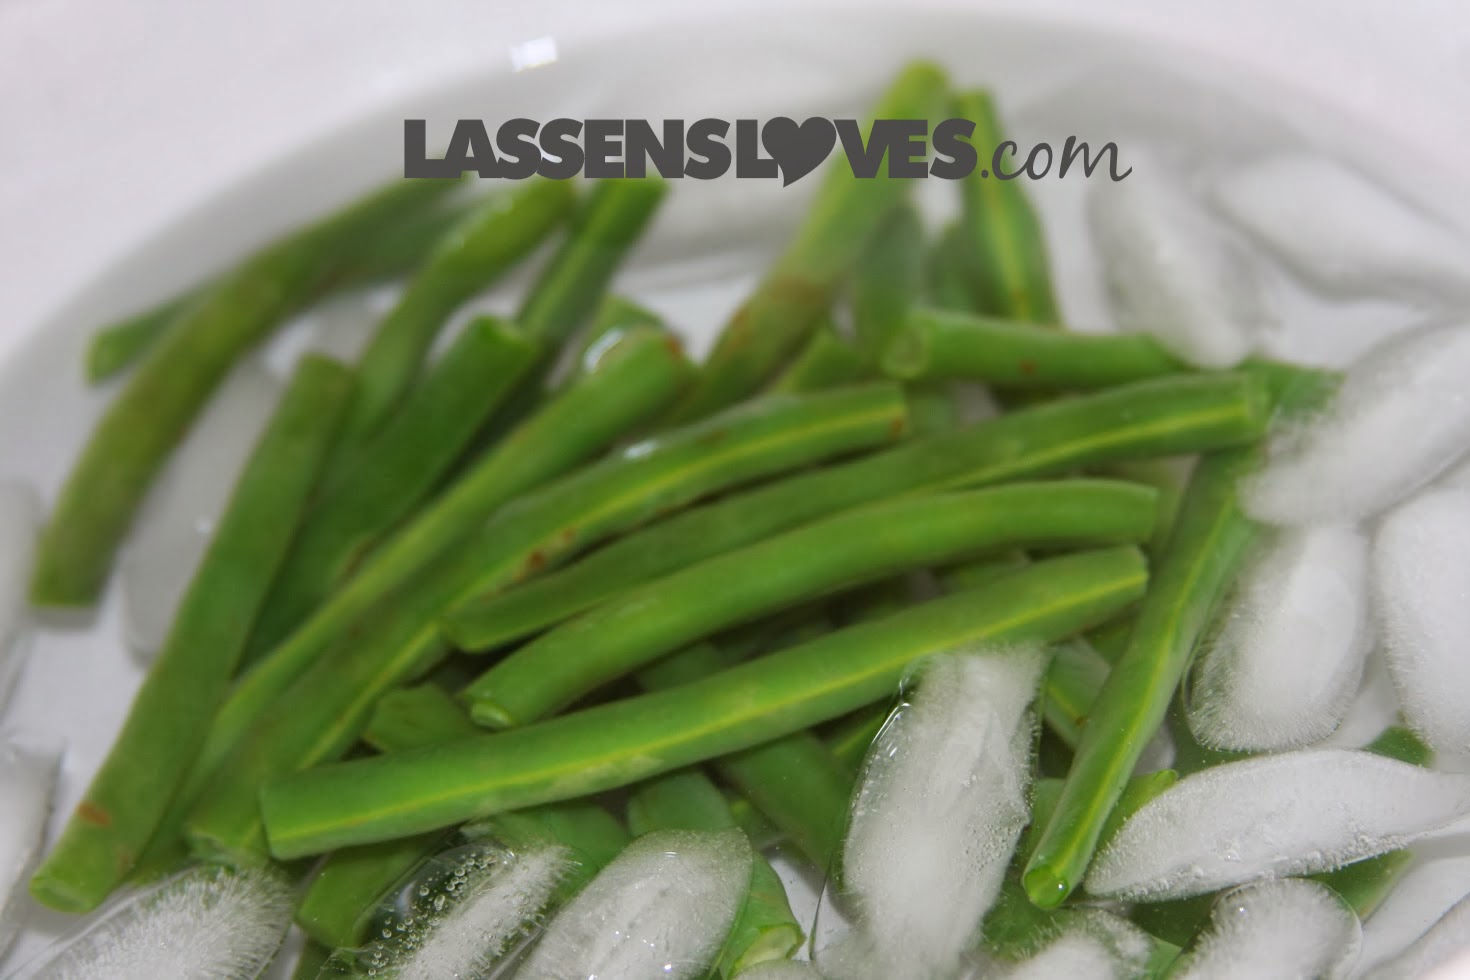 lassensloves.com, Lassen's, Lassens, hemp+seeds, salad+recipe